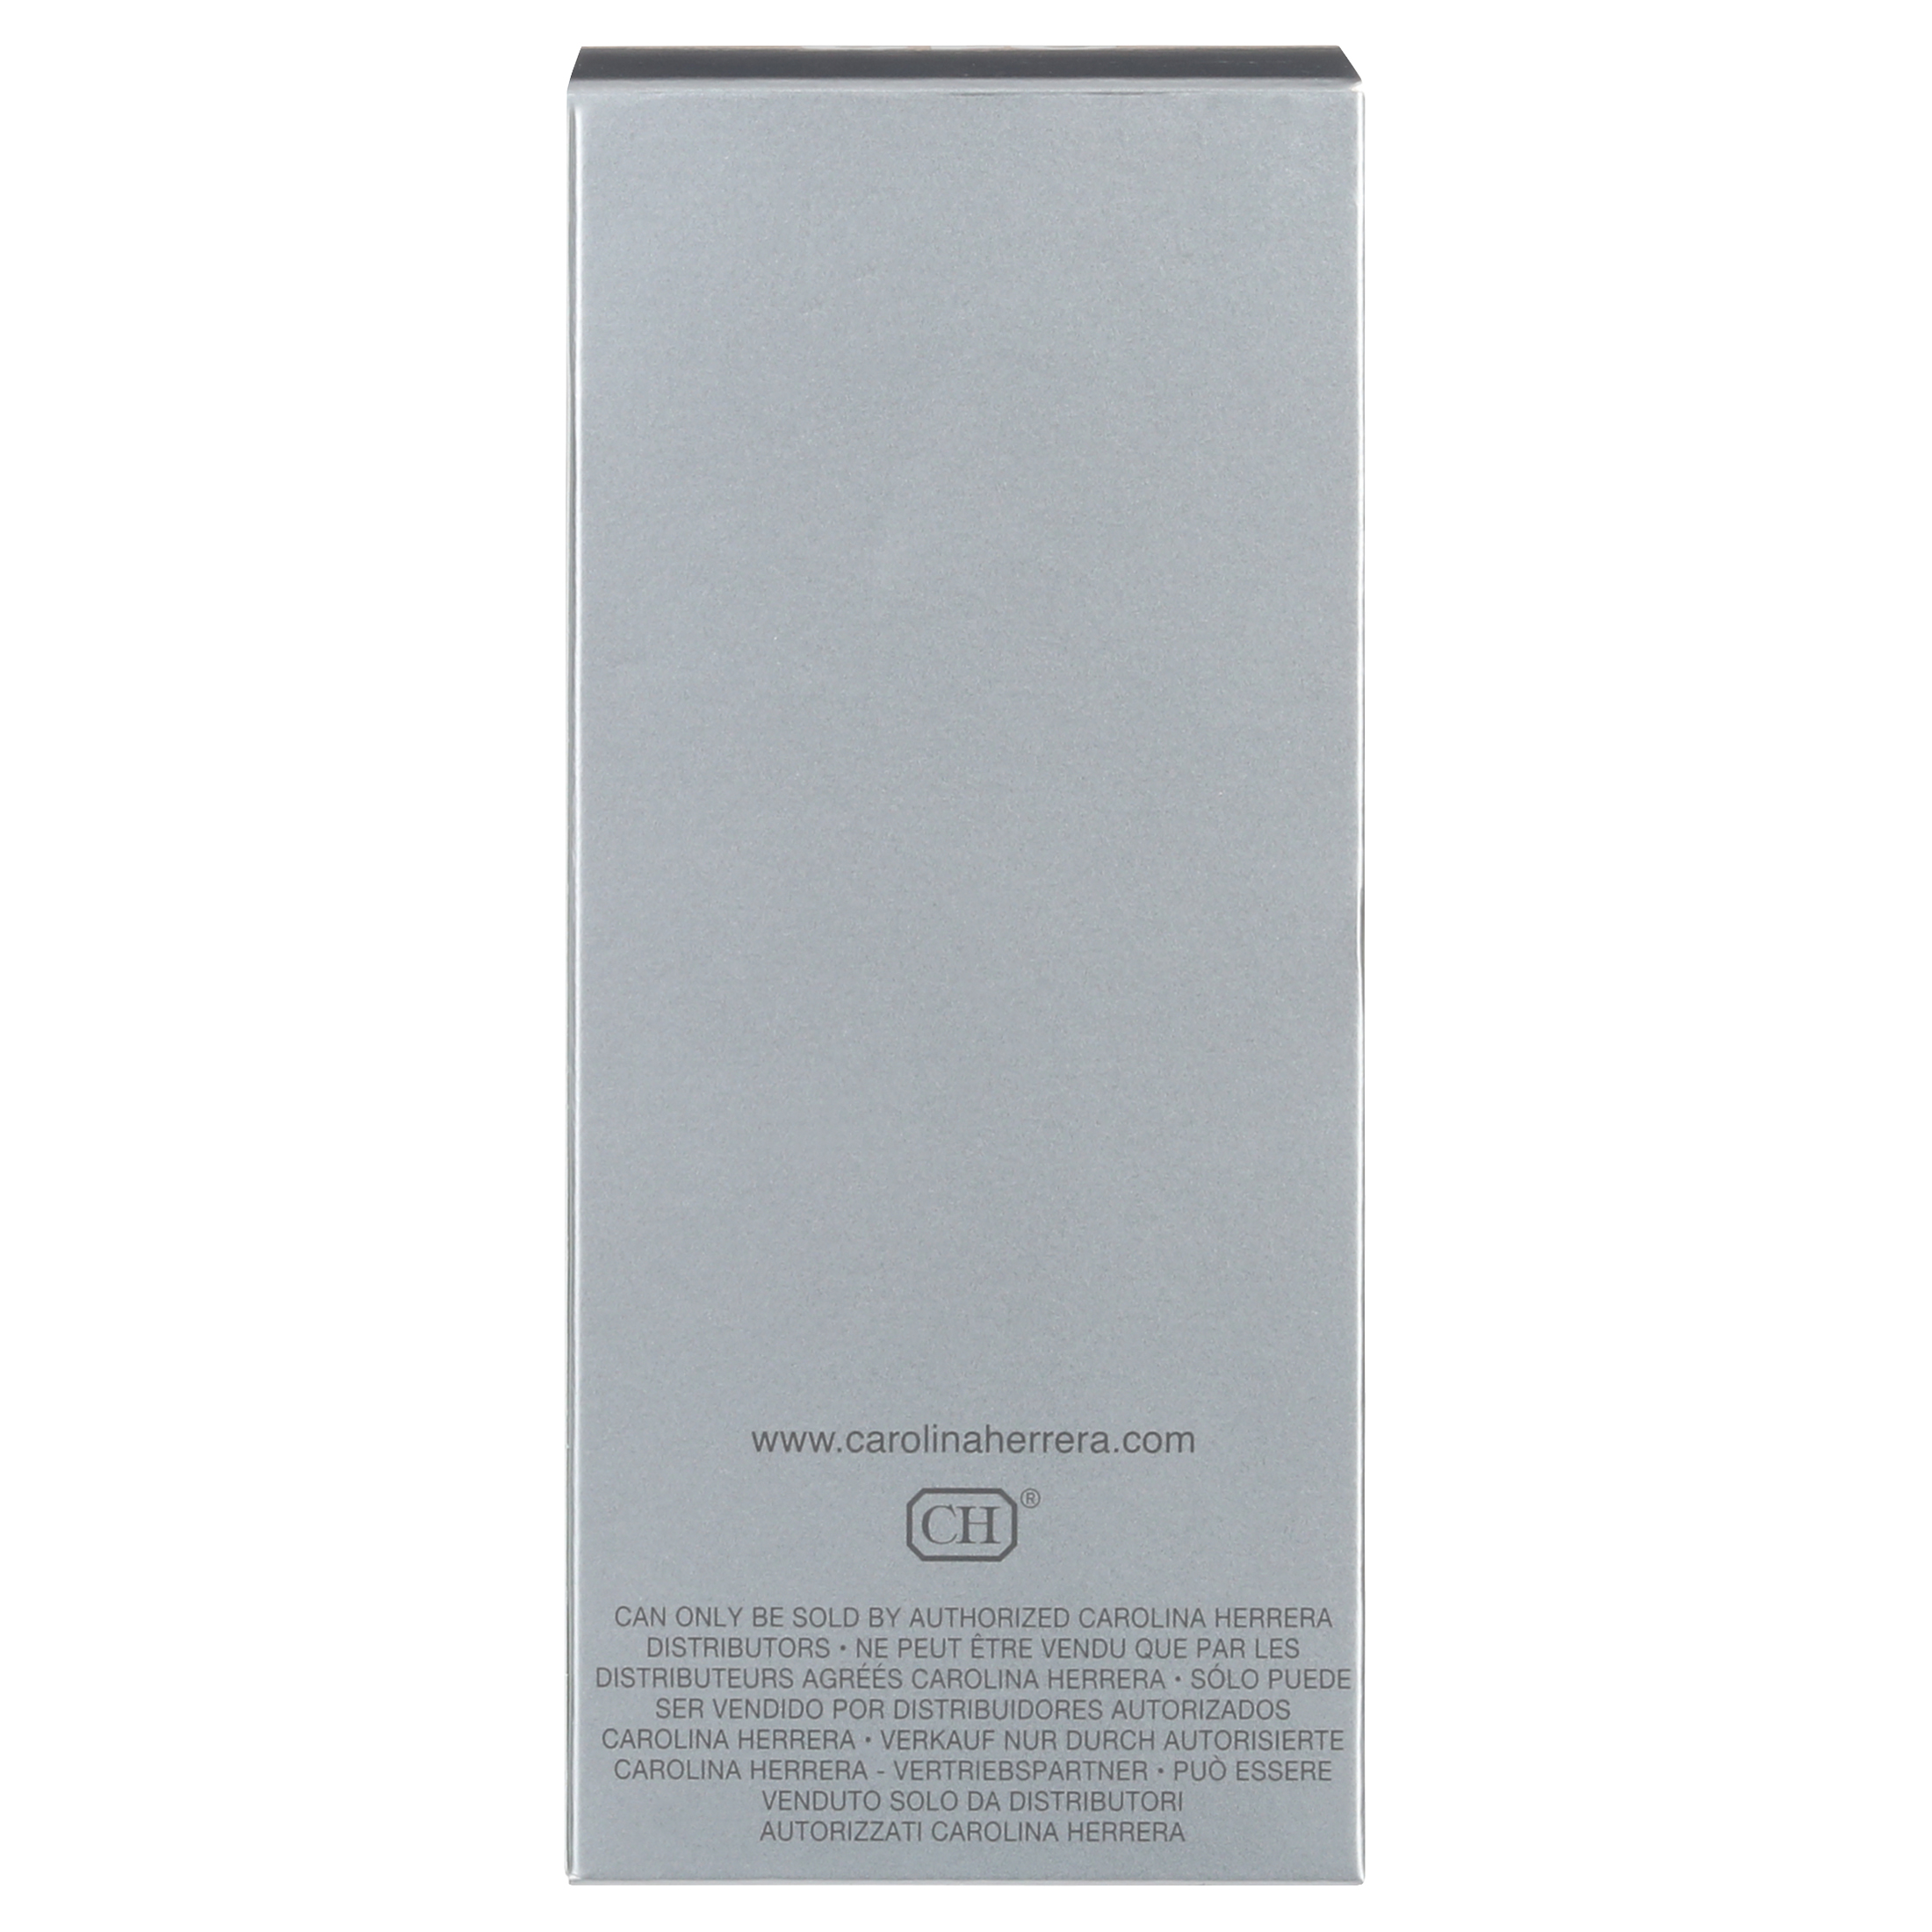 Carolina Herrera 212 Eau De Toilette Spray (New Packaging) for Women 3.4 oz - image 3 of 9